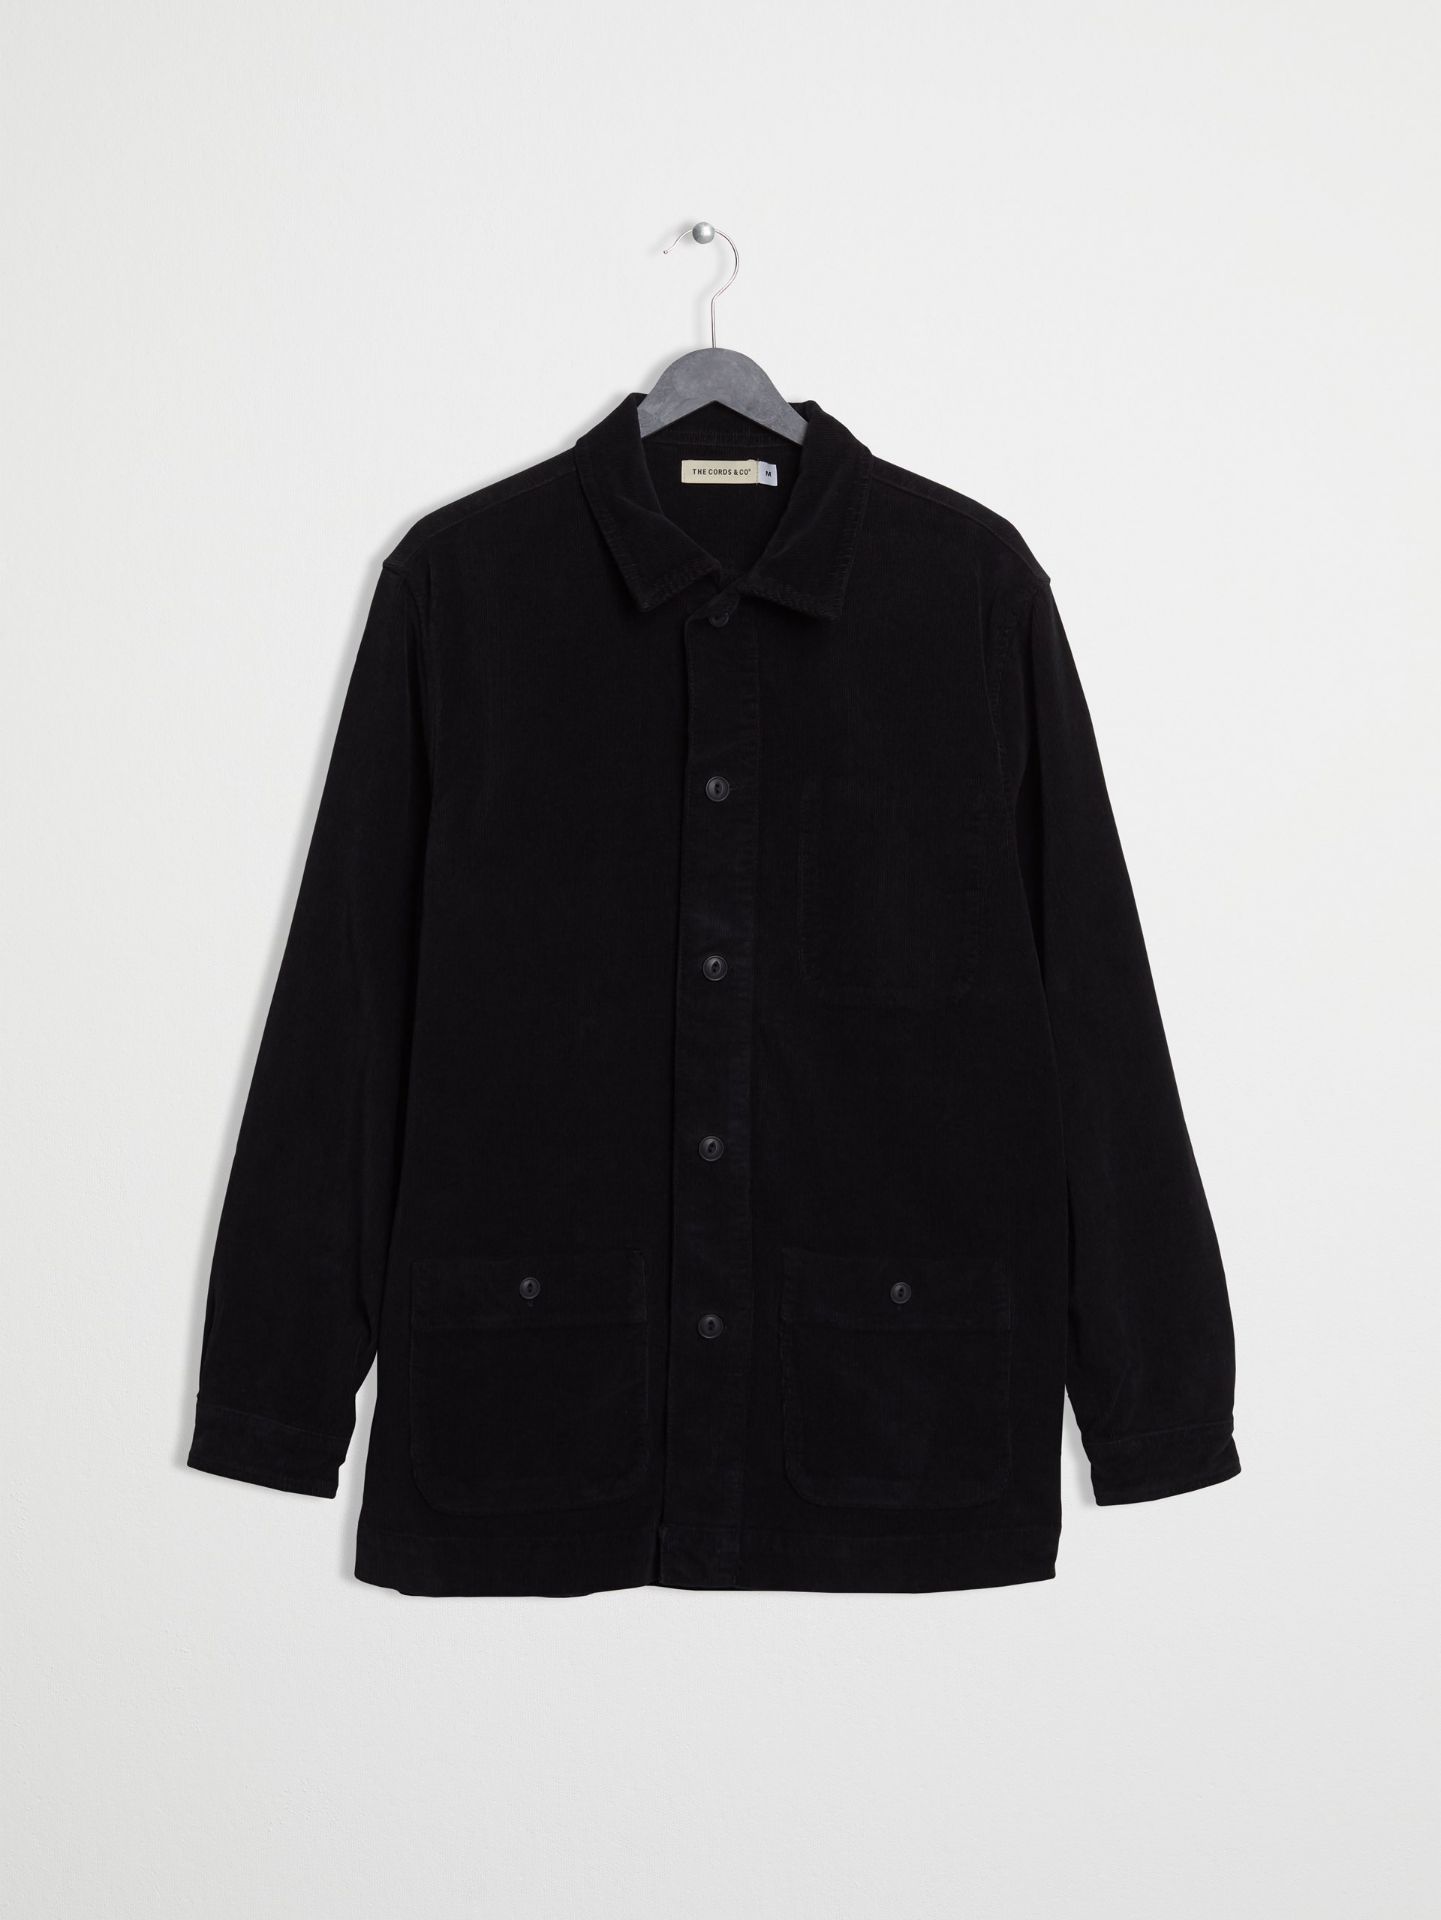 The Cords & Co. "Noah" Style, Mens Collard Long Sleeve Shirt(Black) Small, Medium, Large, X-Large